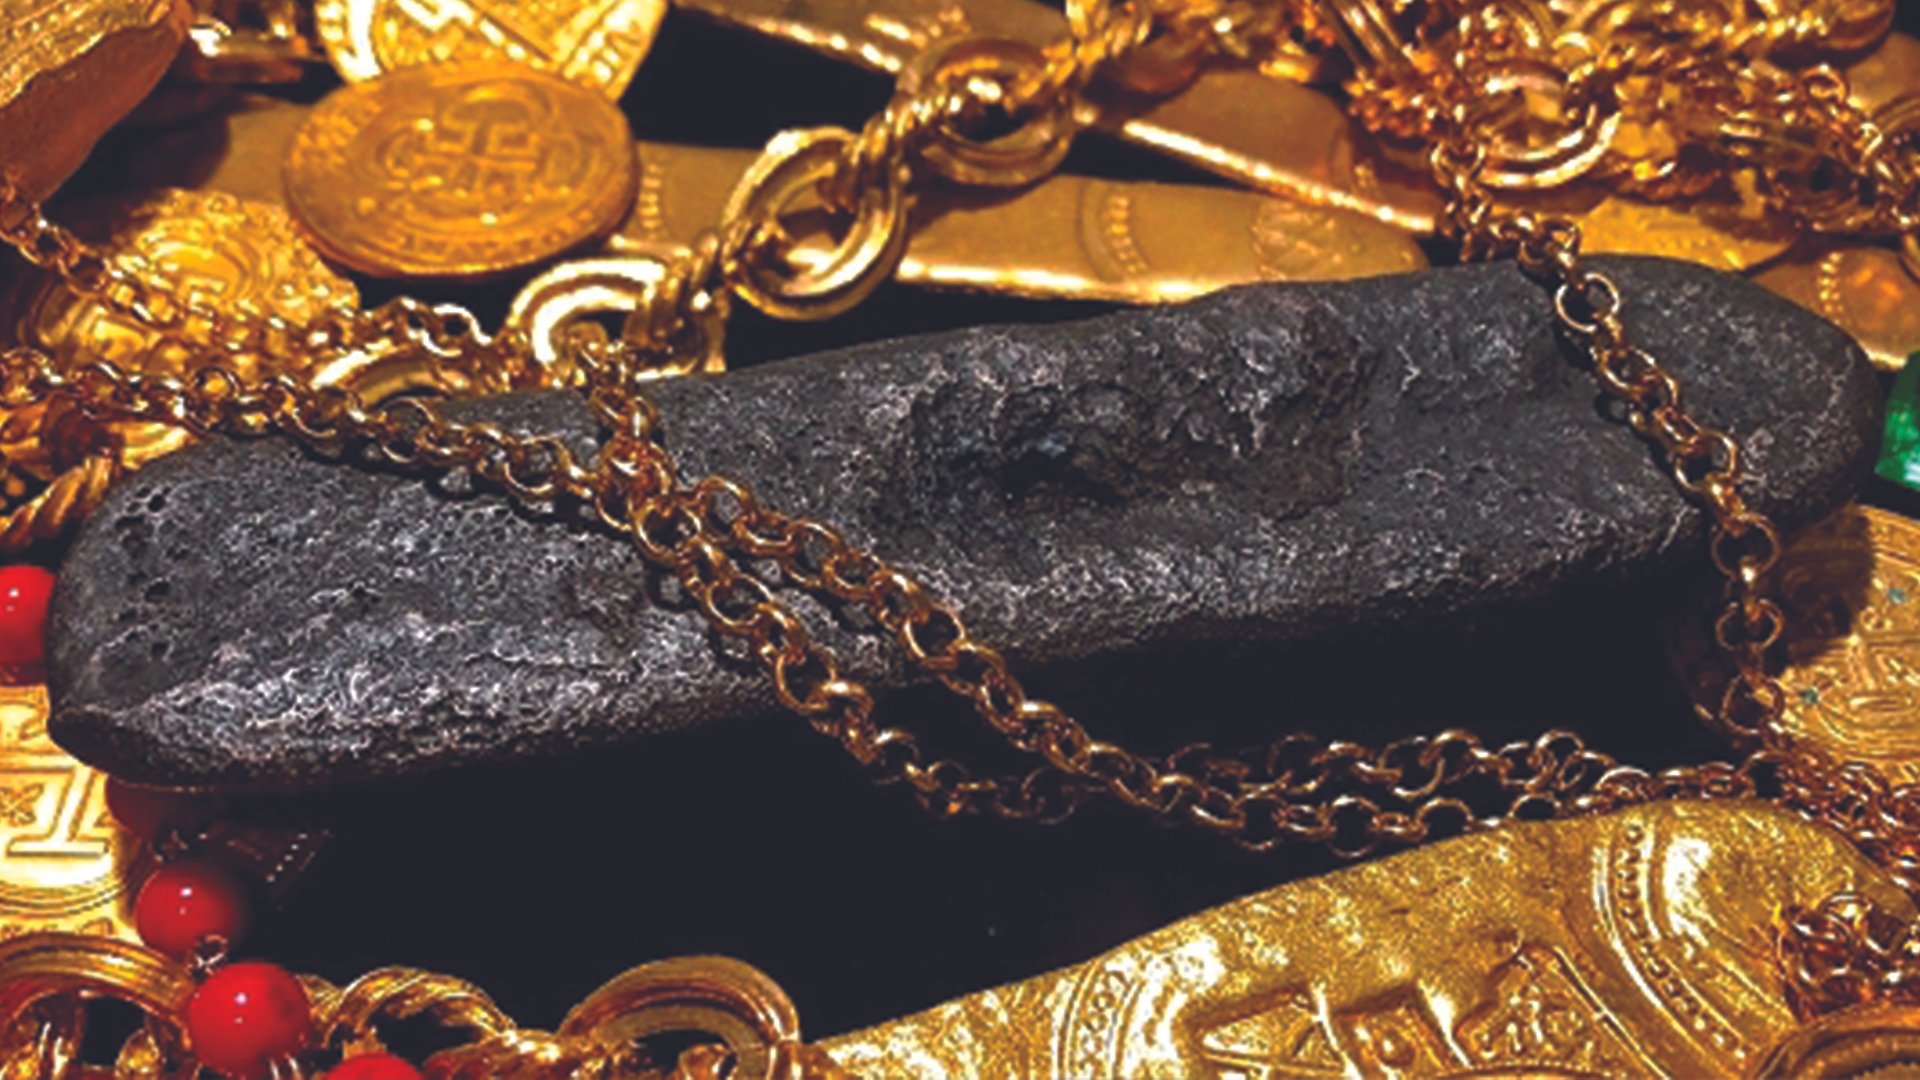 Treasures of the Atocha Shipwreck - Gold and Silver Bars